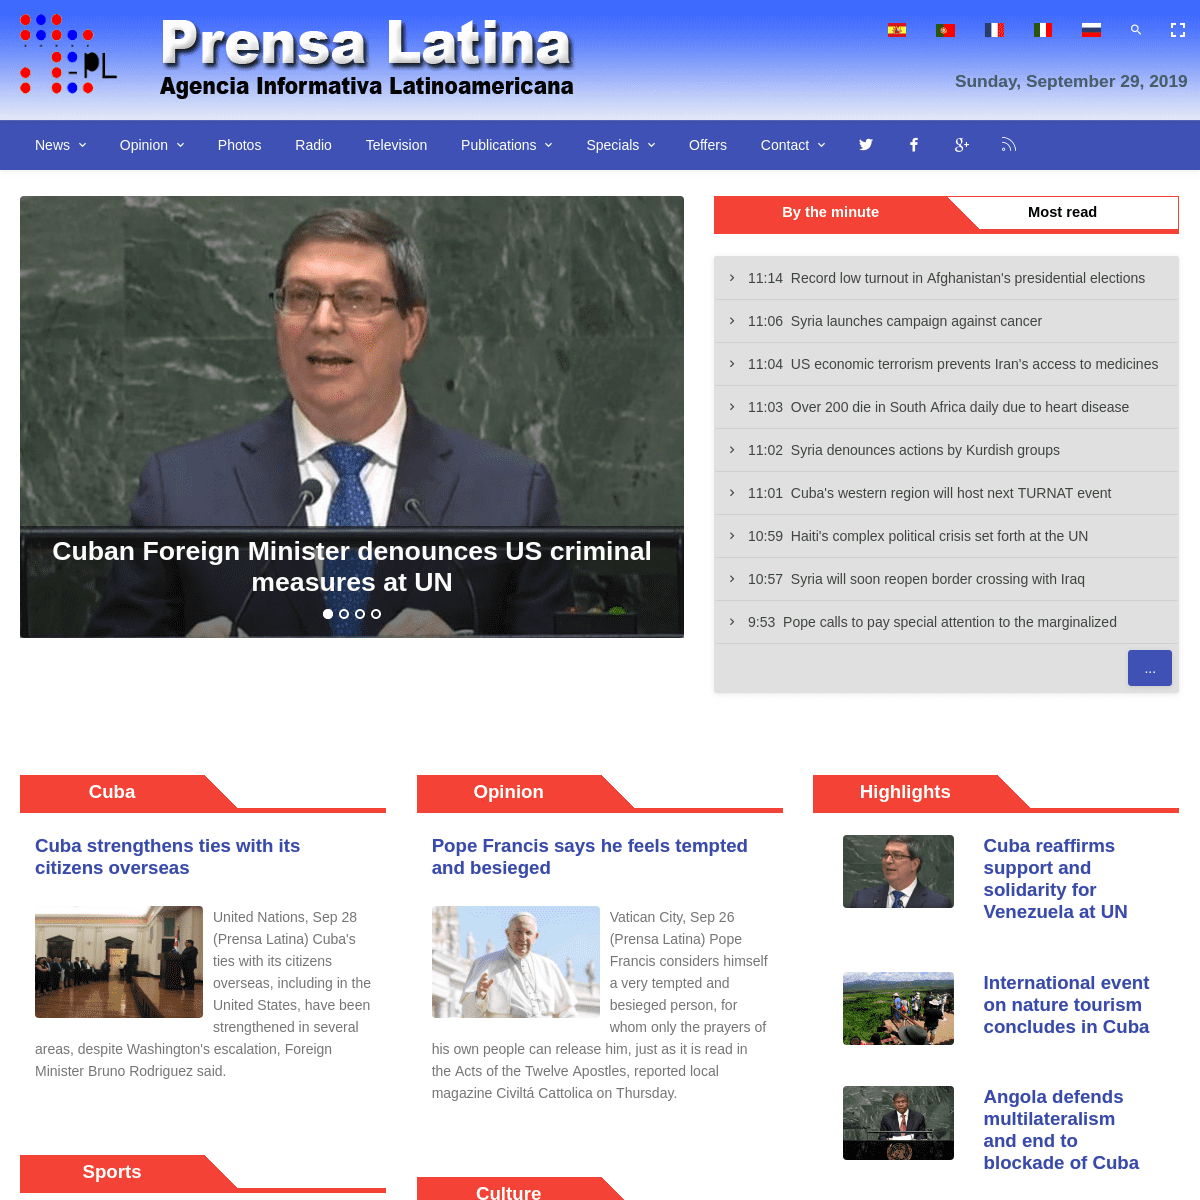 Prensa Latina - Latin American News Agency